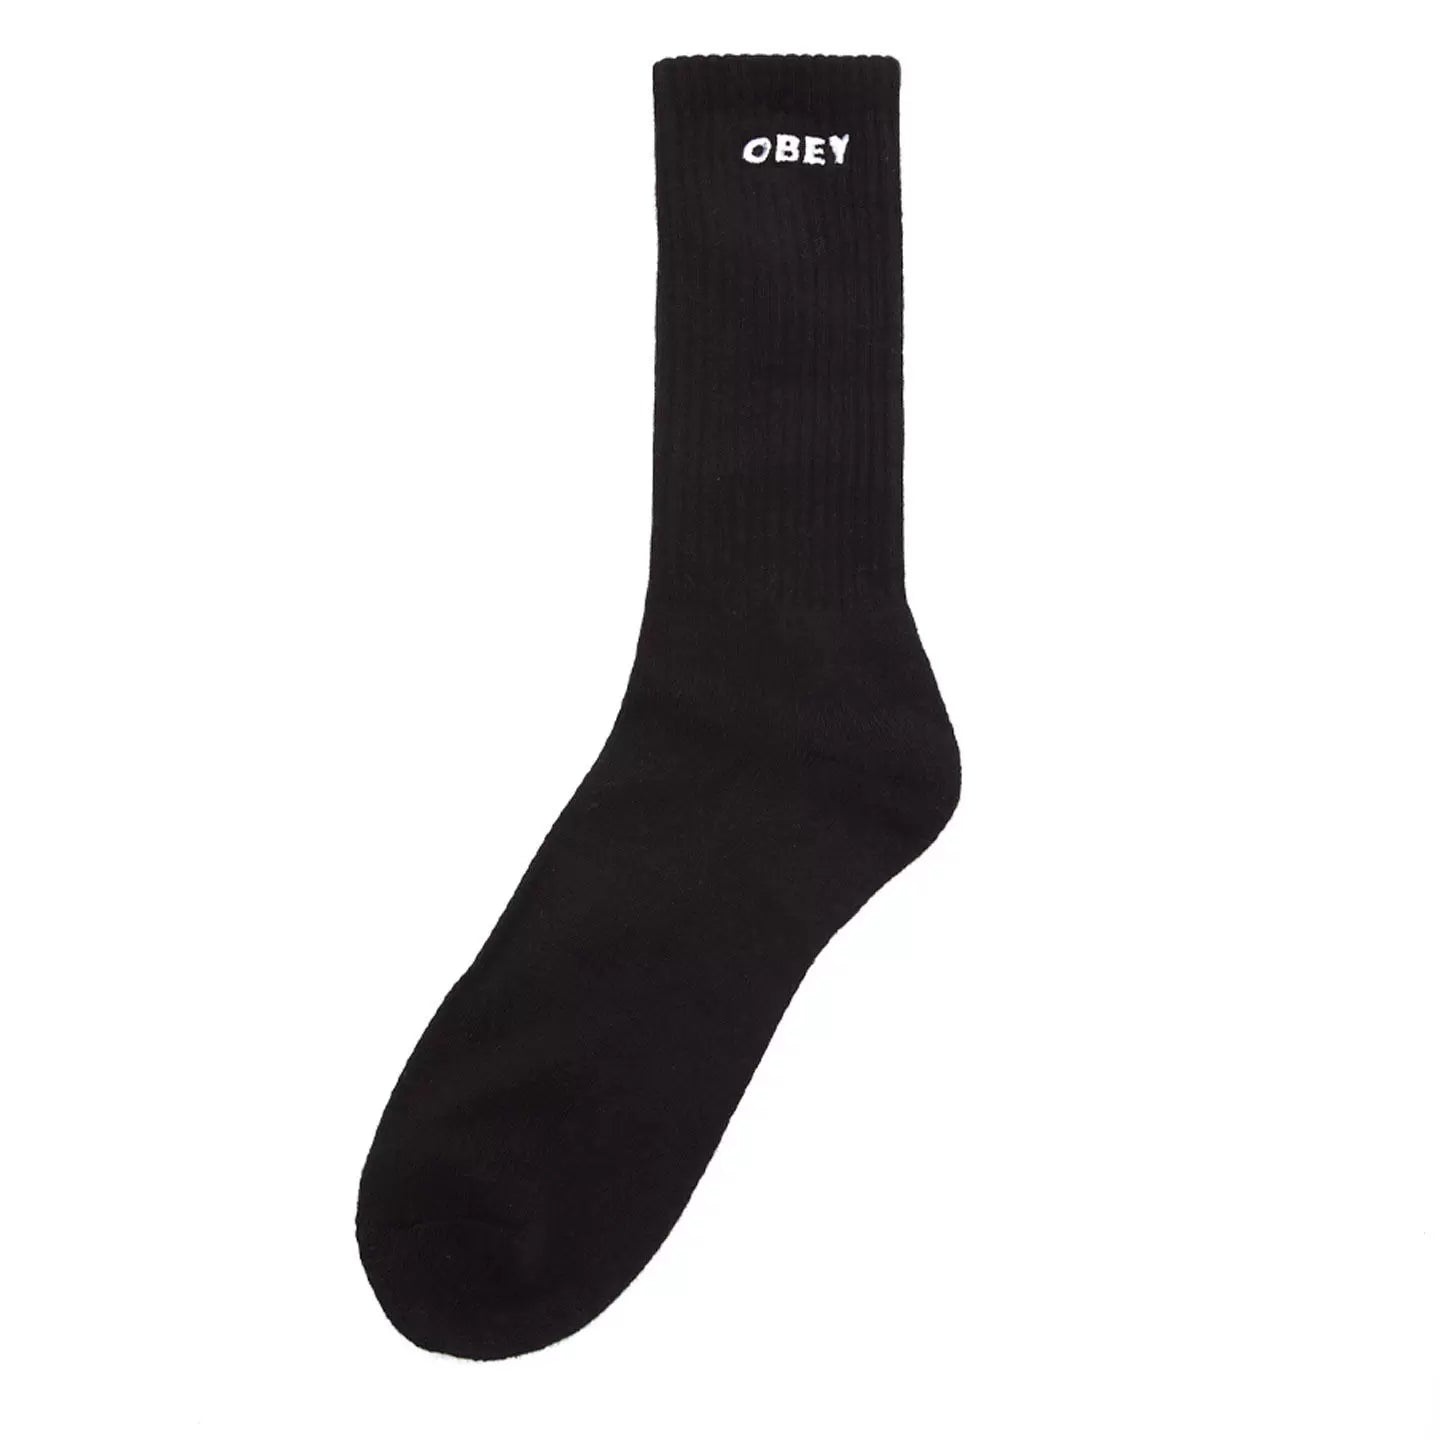 obey-bold-socks-black-1